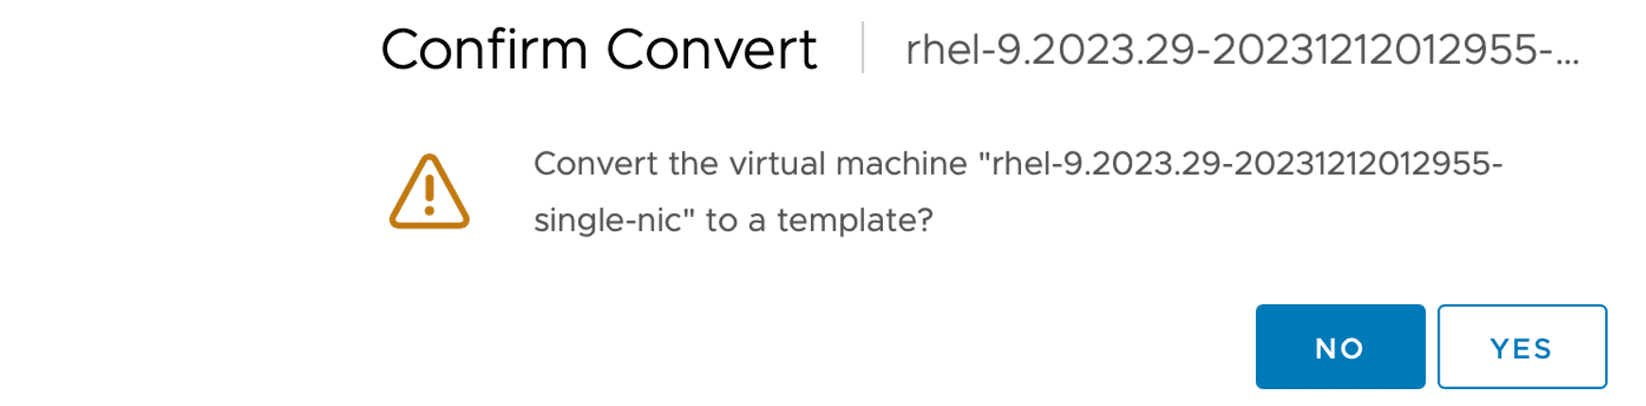 Figure: Confirm Convert message